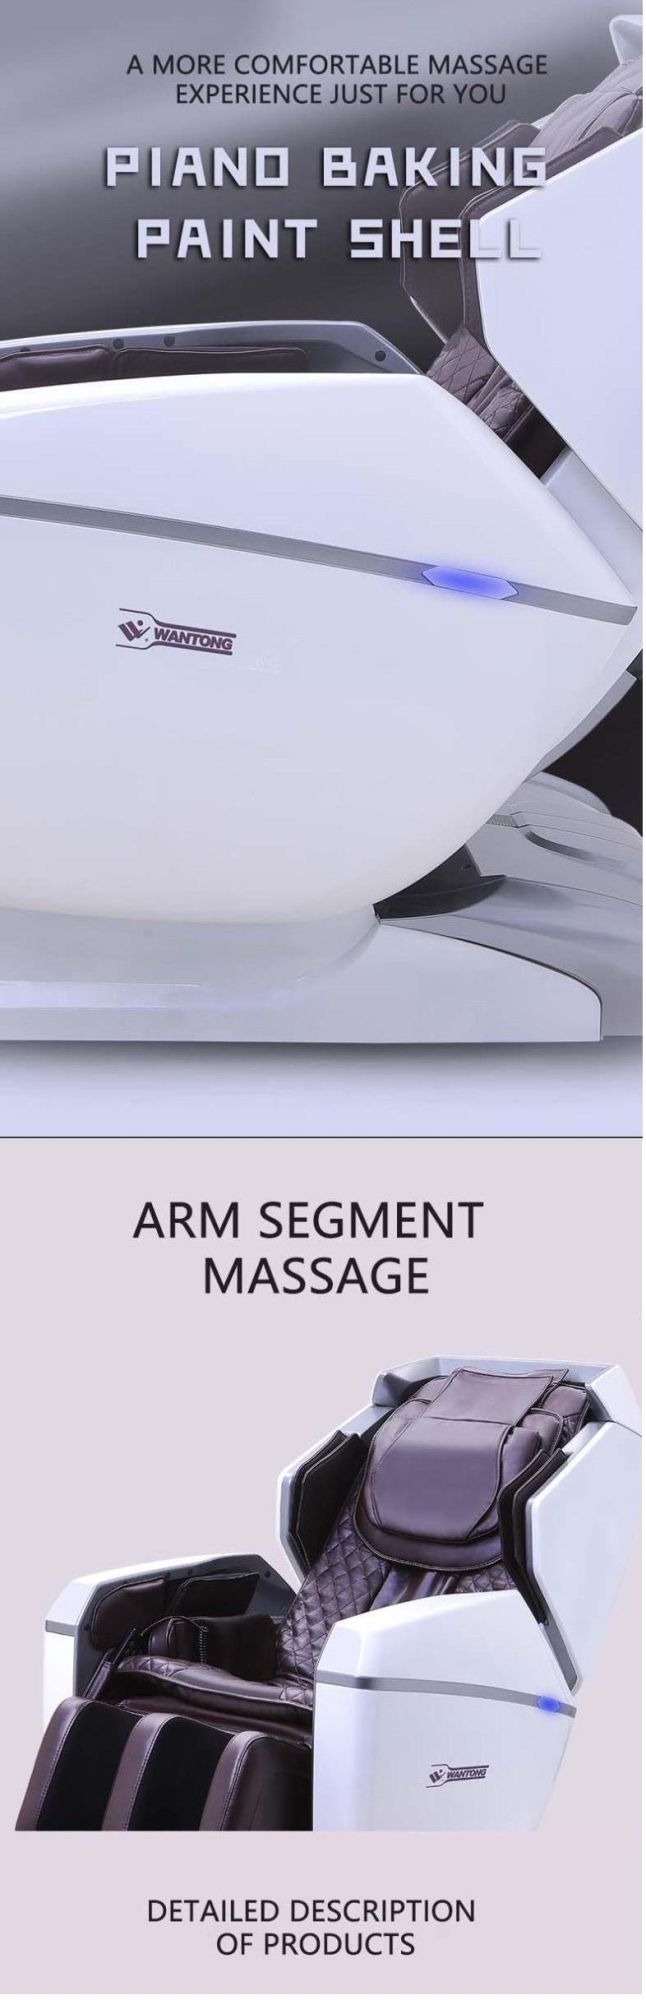 2021 Luxury Cheap Price Full Body Electric Smart Recliner 3D Massage Chair Hand SL Track Zero Gravity Shiatsu 4D Massage Chair for Home Office